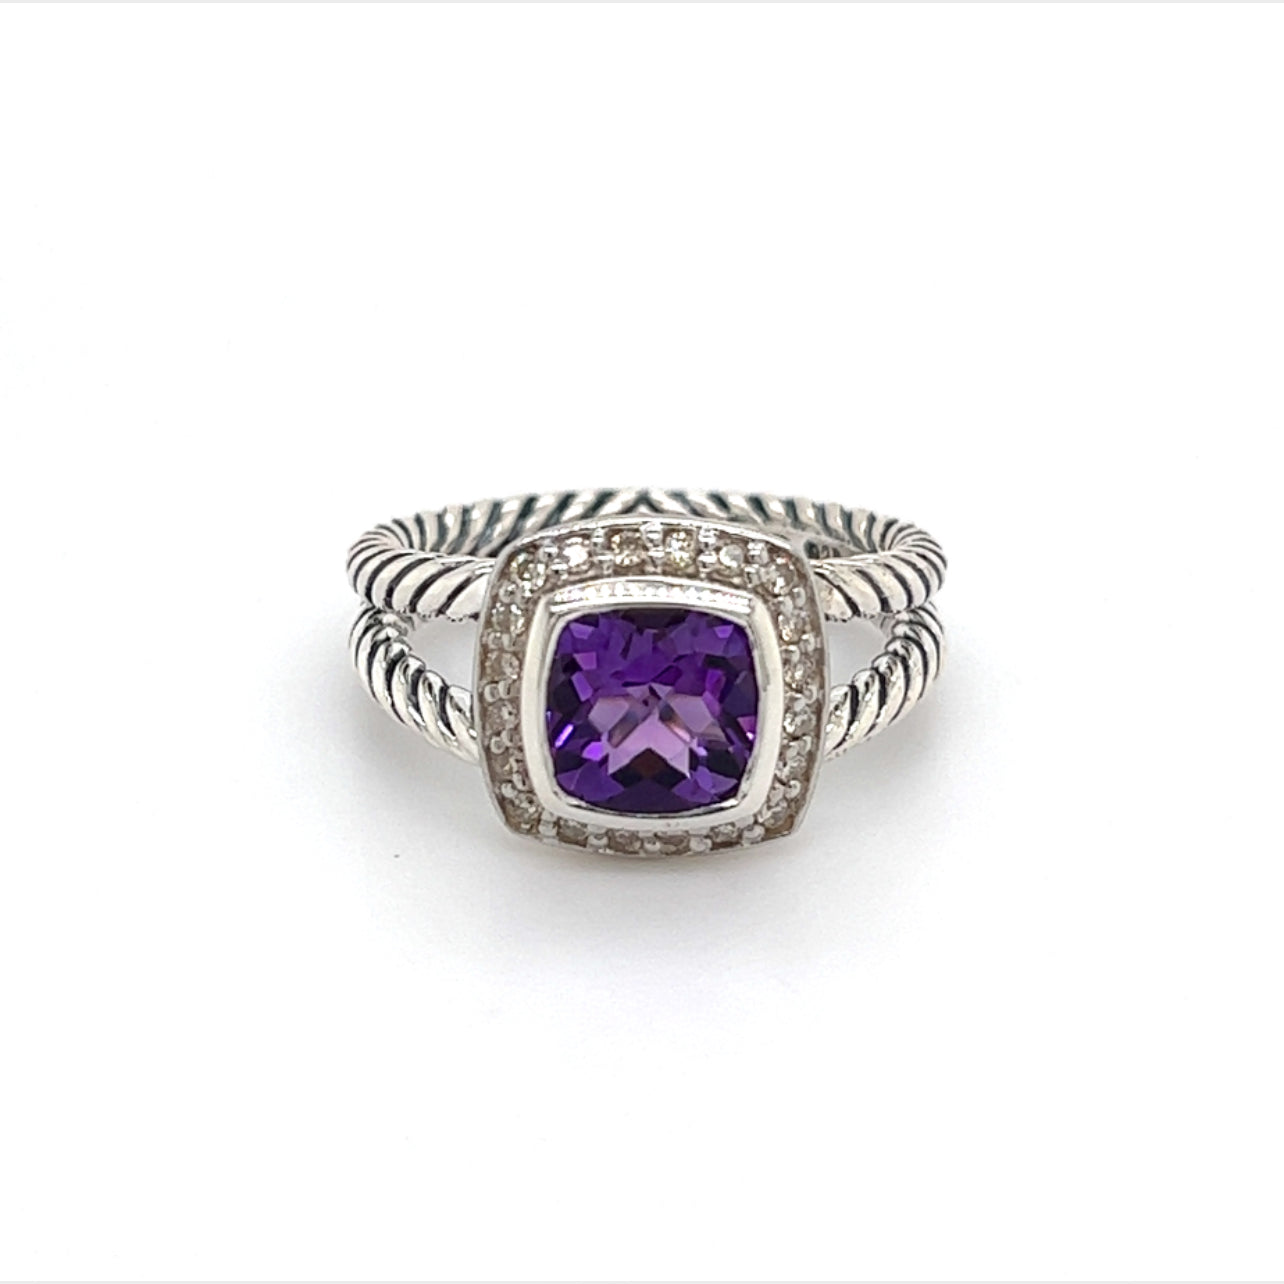 David Yurman Authentic Estate Diamond Petite Albion Amethyst Ring Size 7 Sil 1.67 TCW DY187 - Certified Fine Jewelry